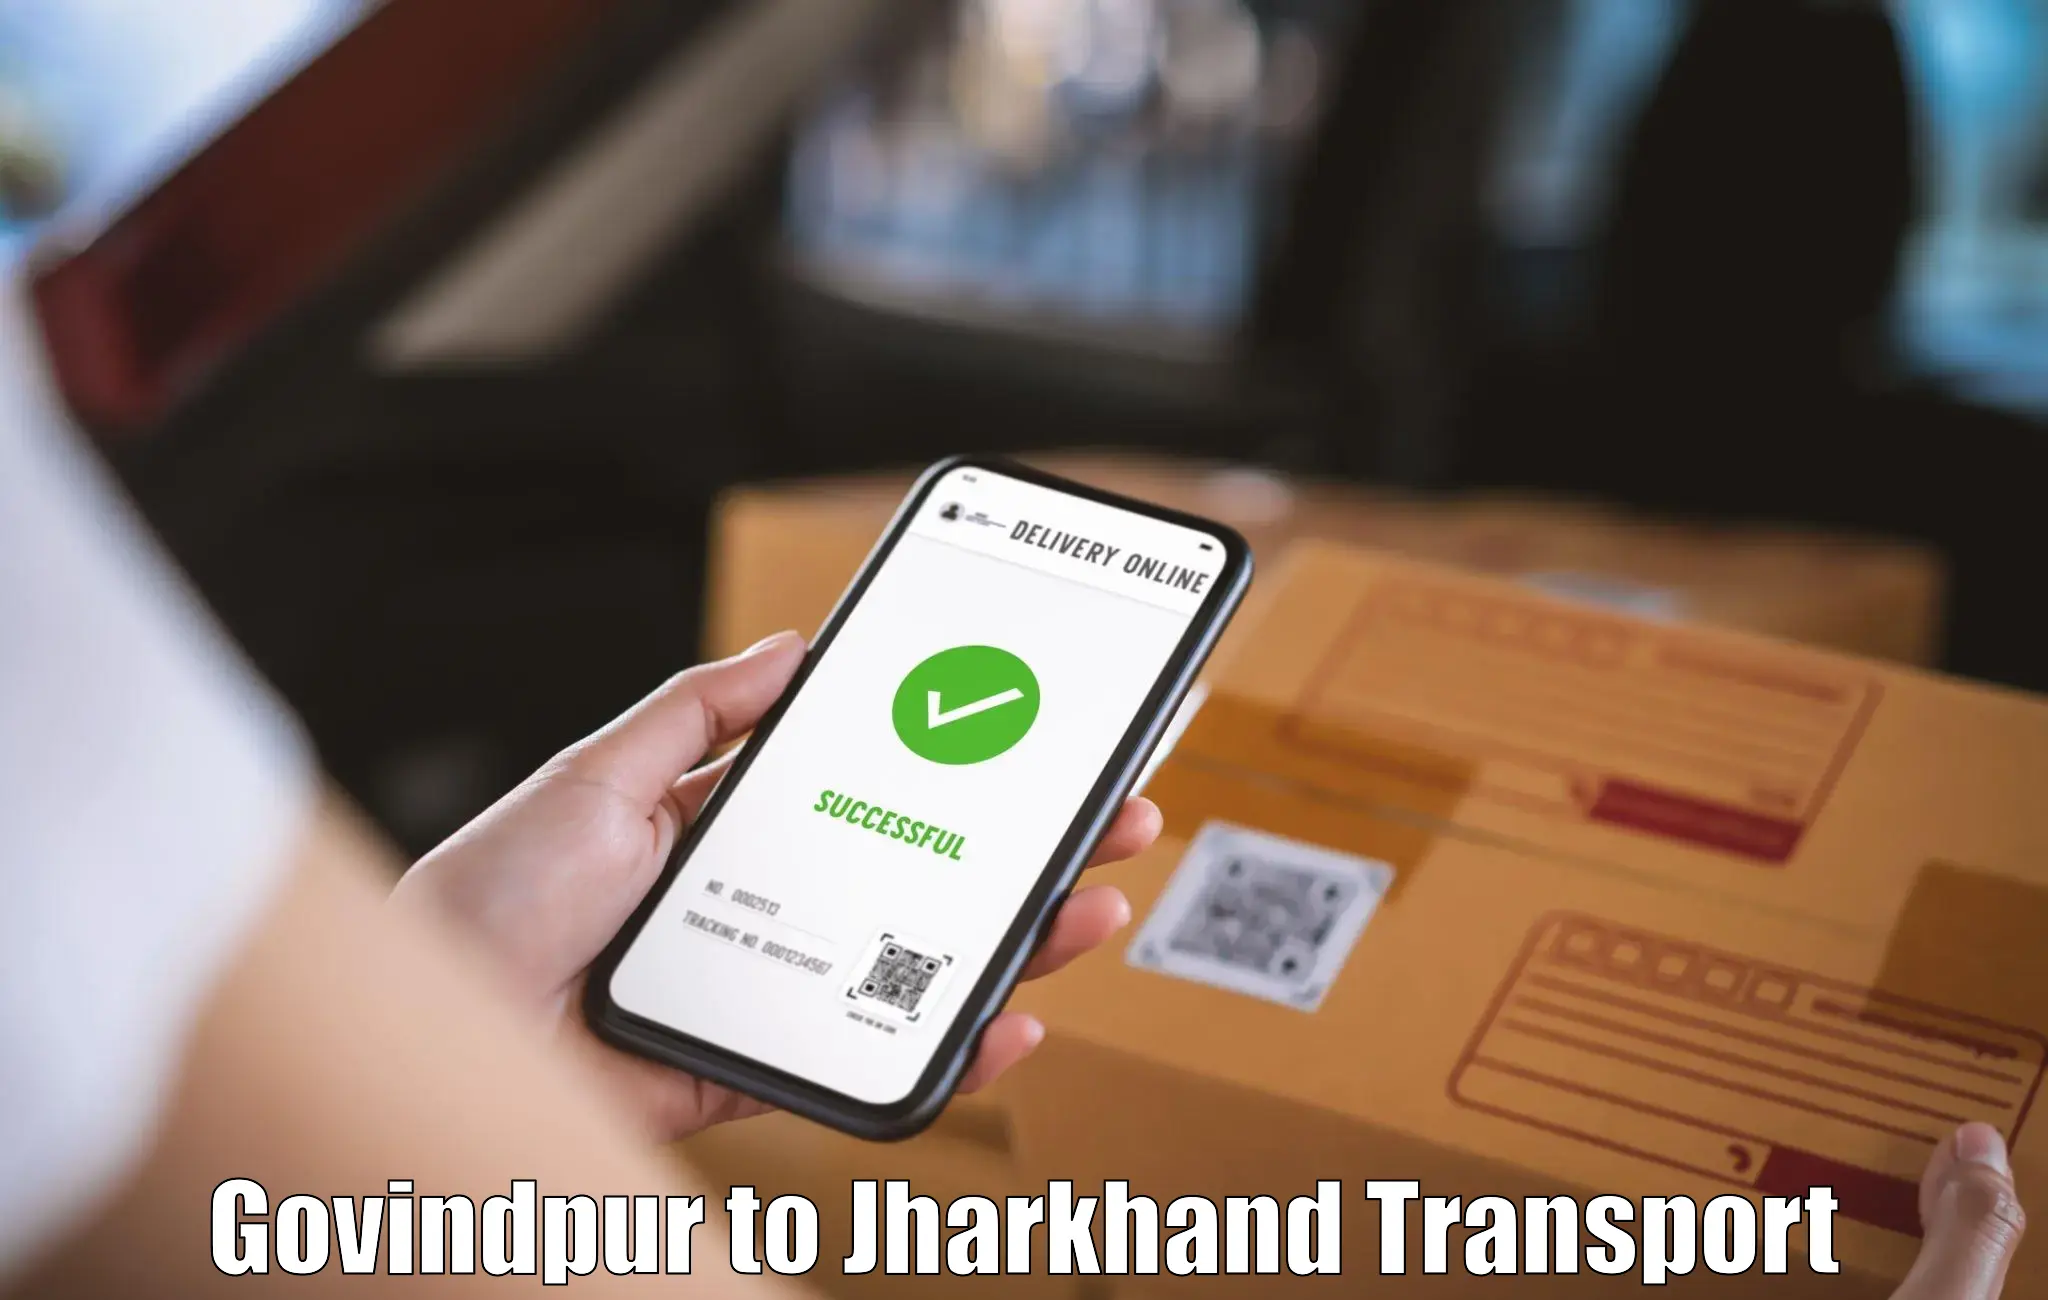 Transport shared services Govindpur to Bundu